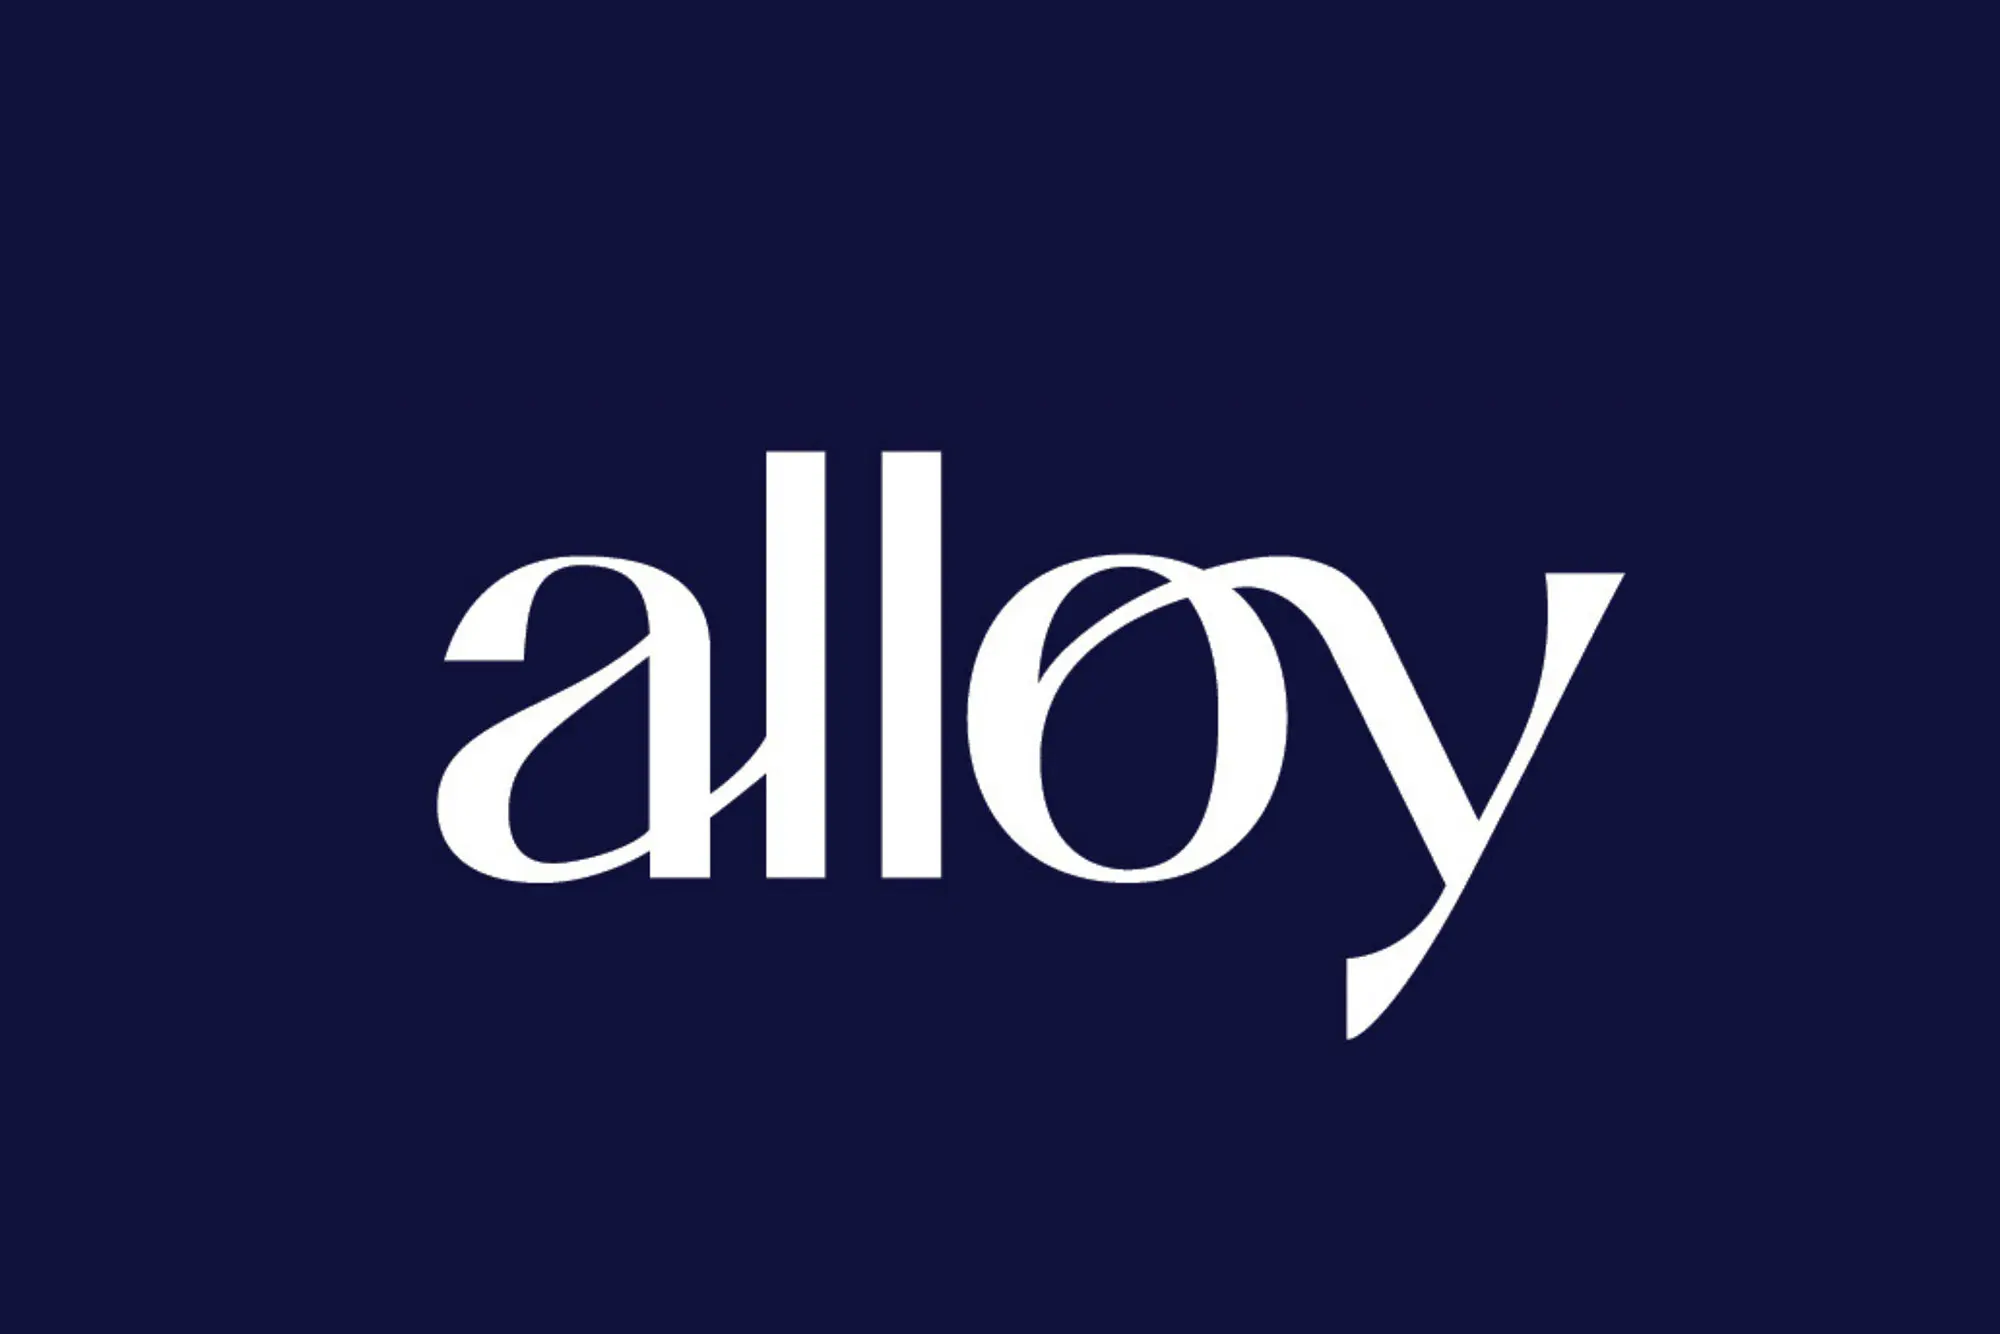 Alloy logo in white on Indigo blue background.